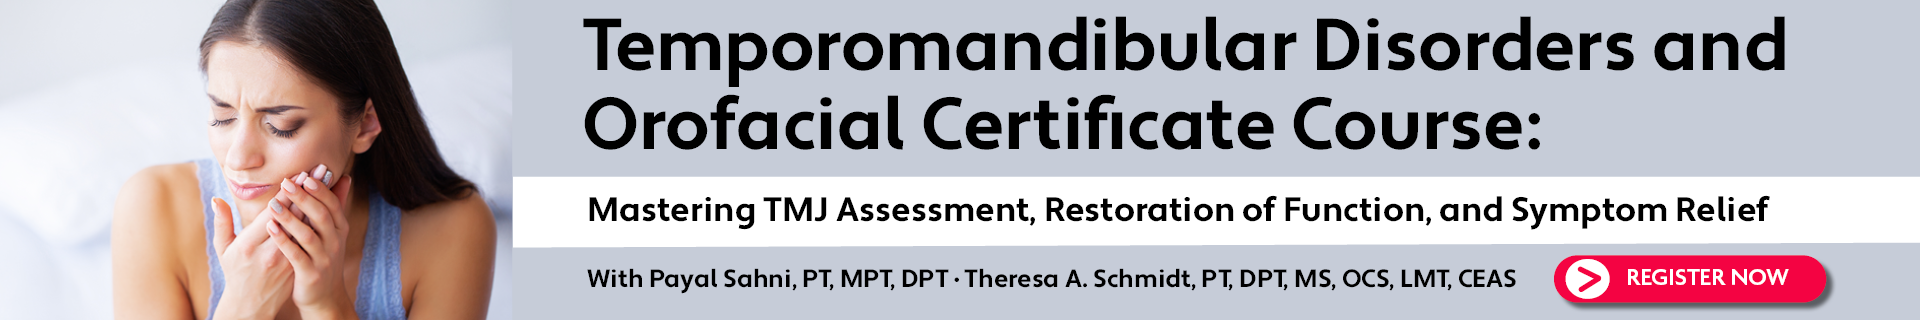 Temporomandibular Disorders and Orofacial Certificate Course